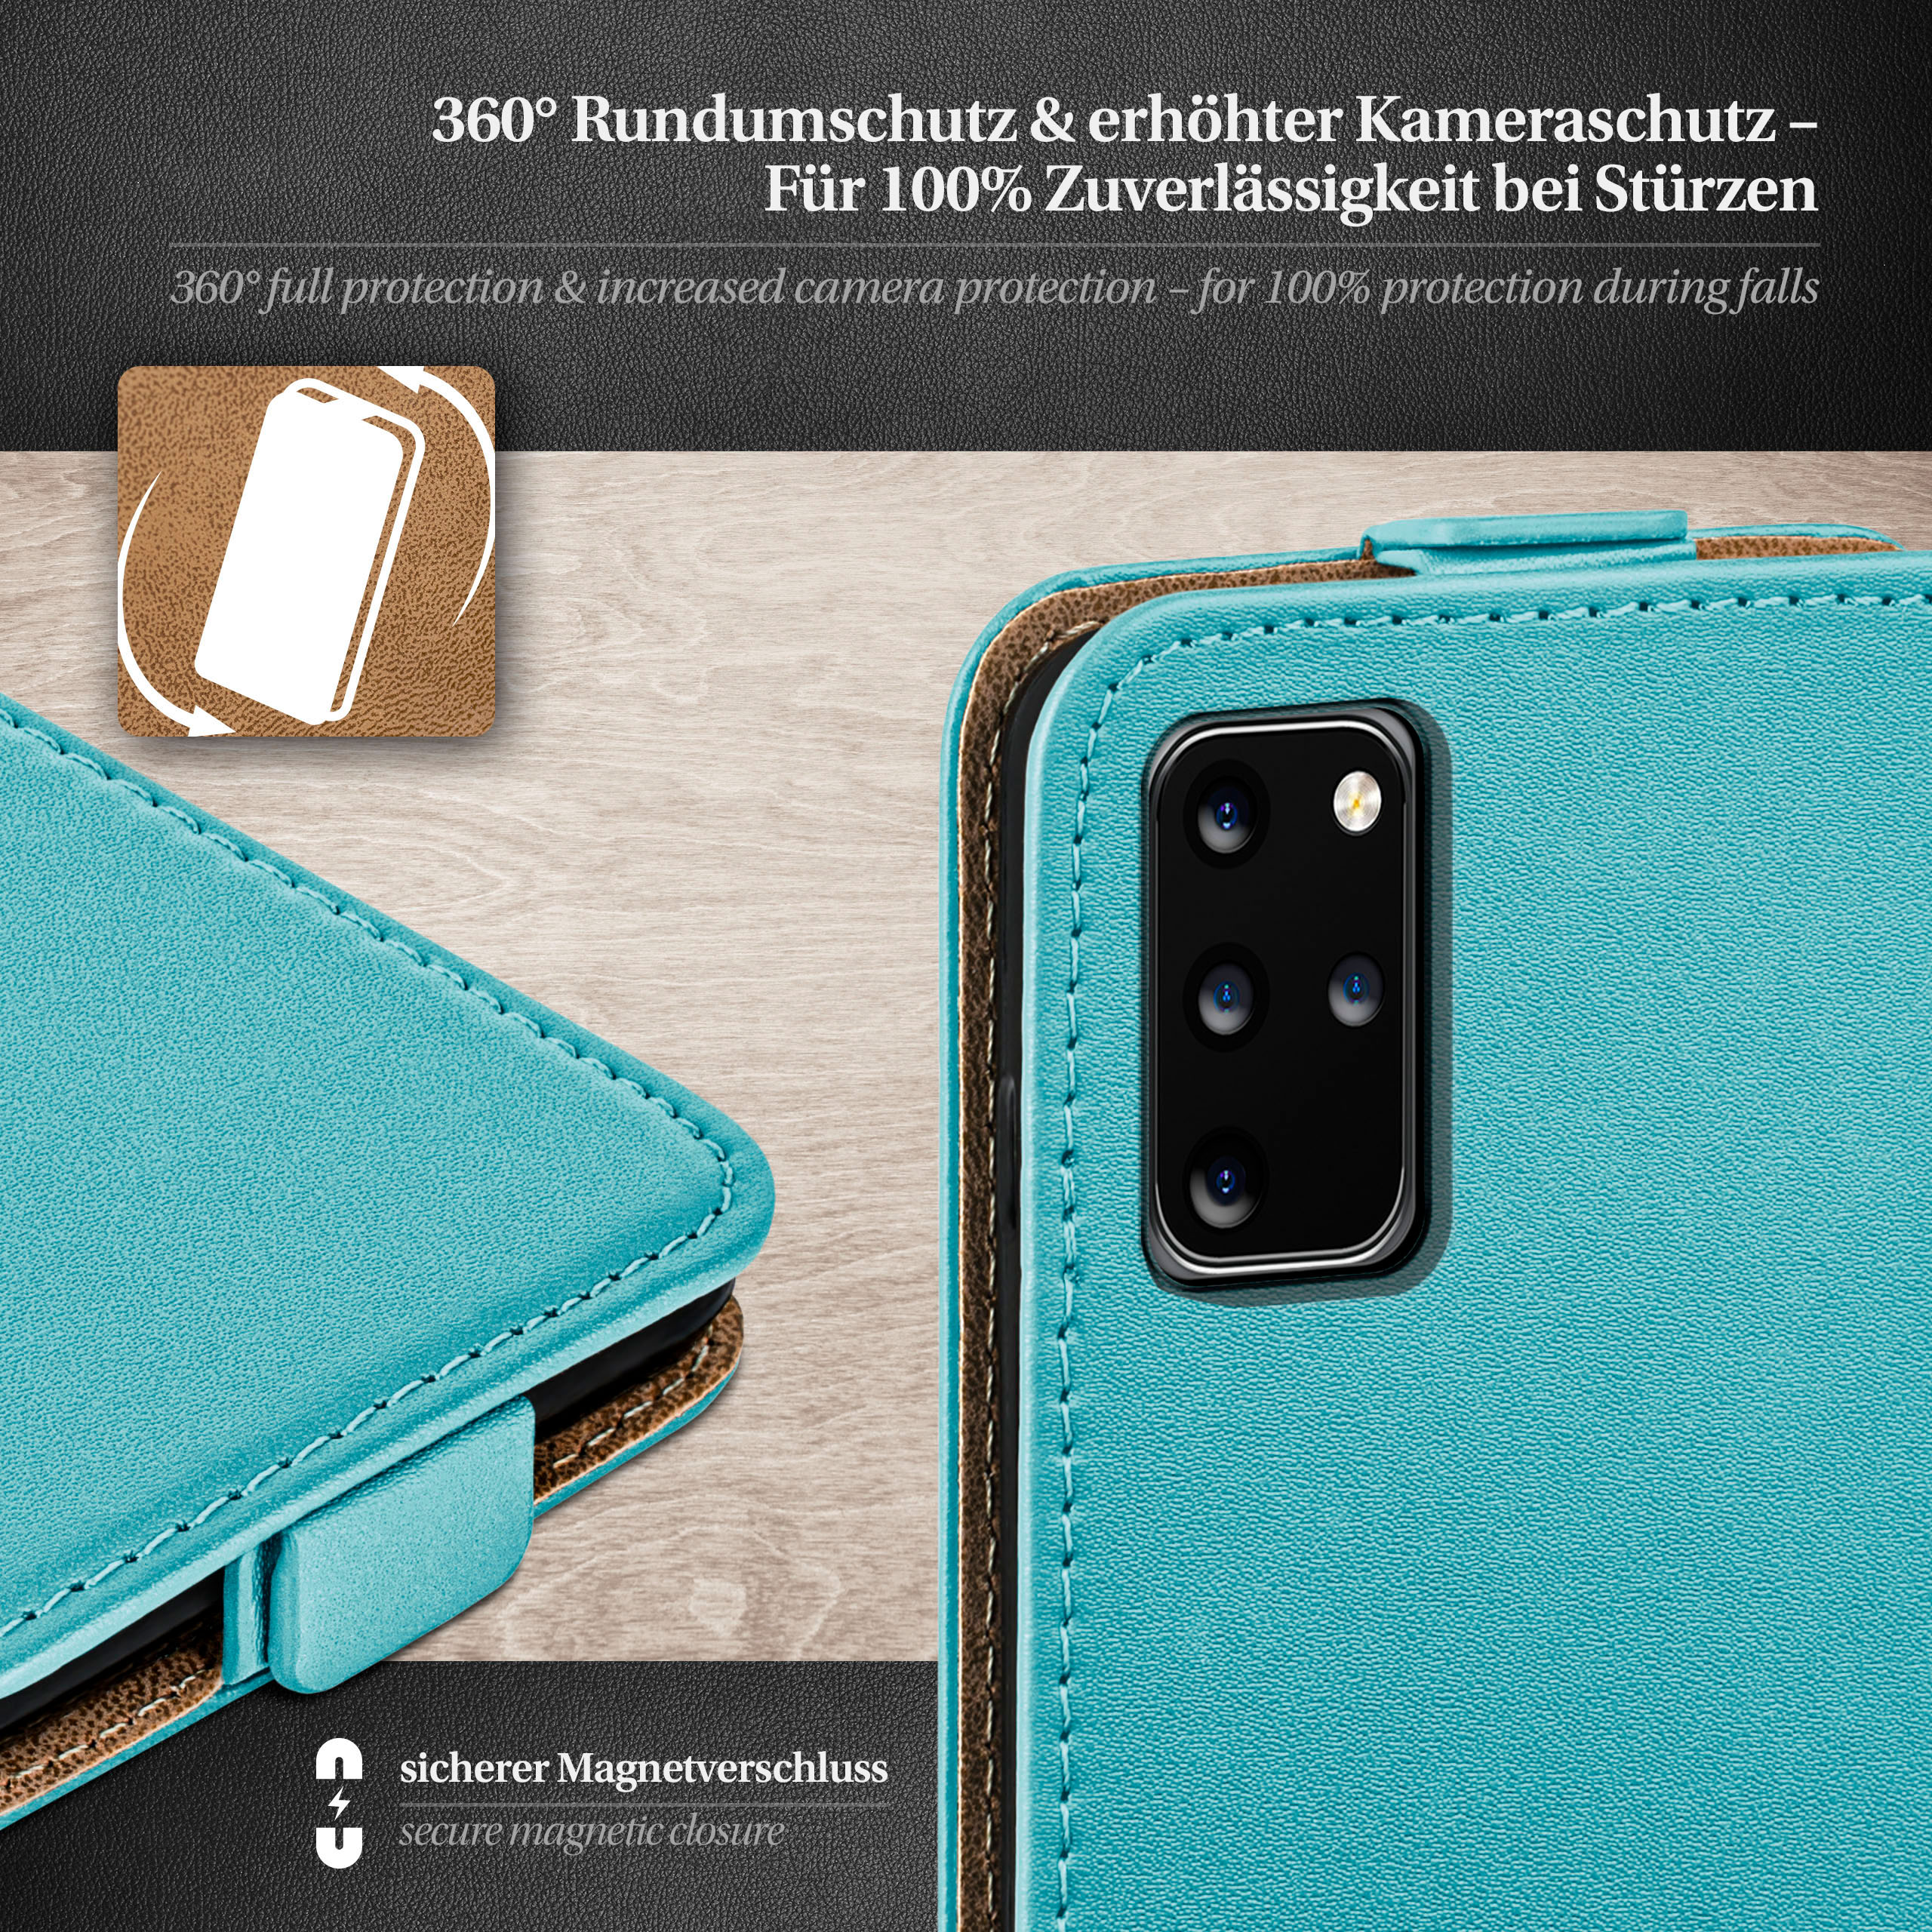 5G, Cover, MOEX Flip Galaxy Flip Case, Aqua-Cyan S20 / Plus Samsung,